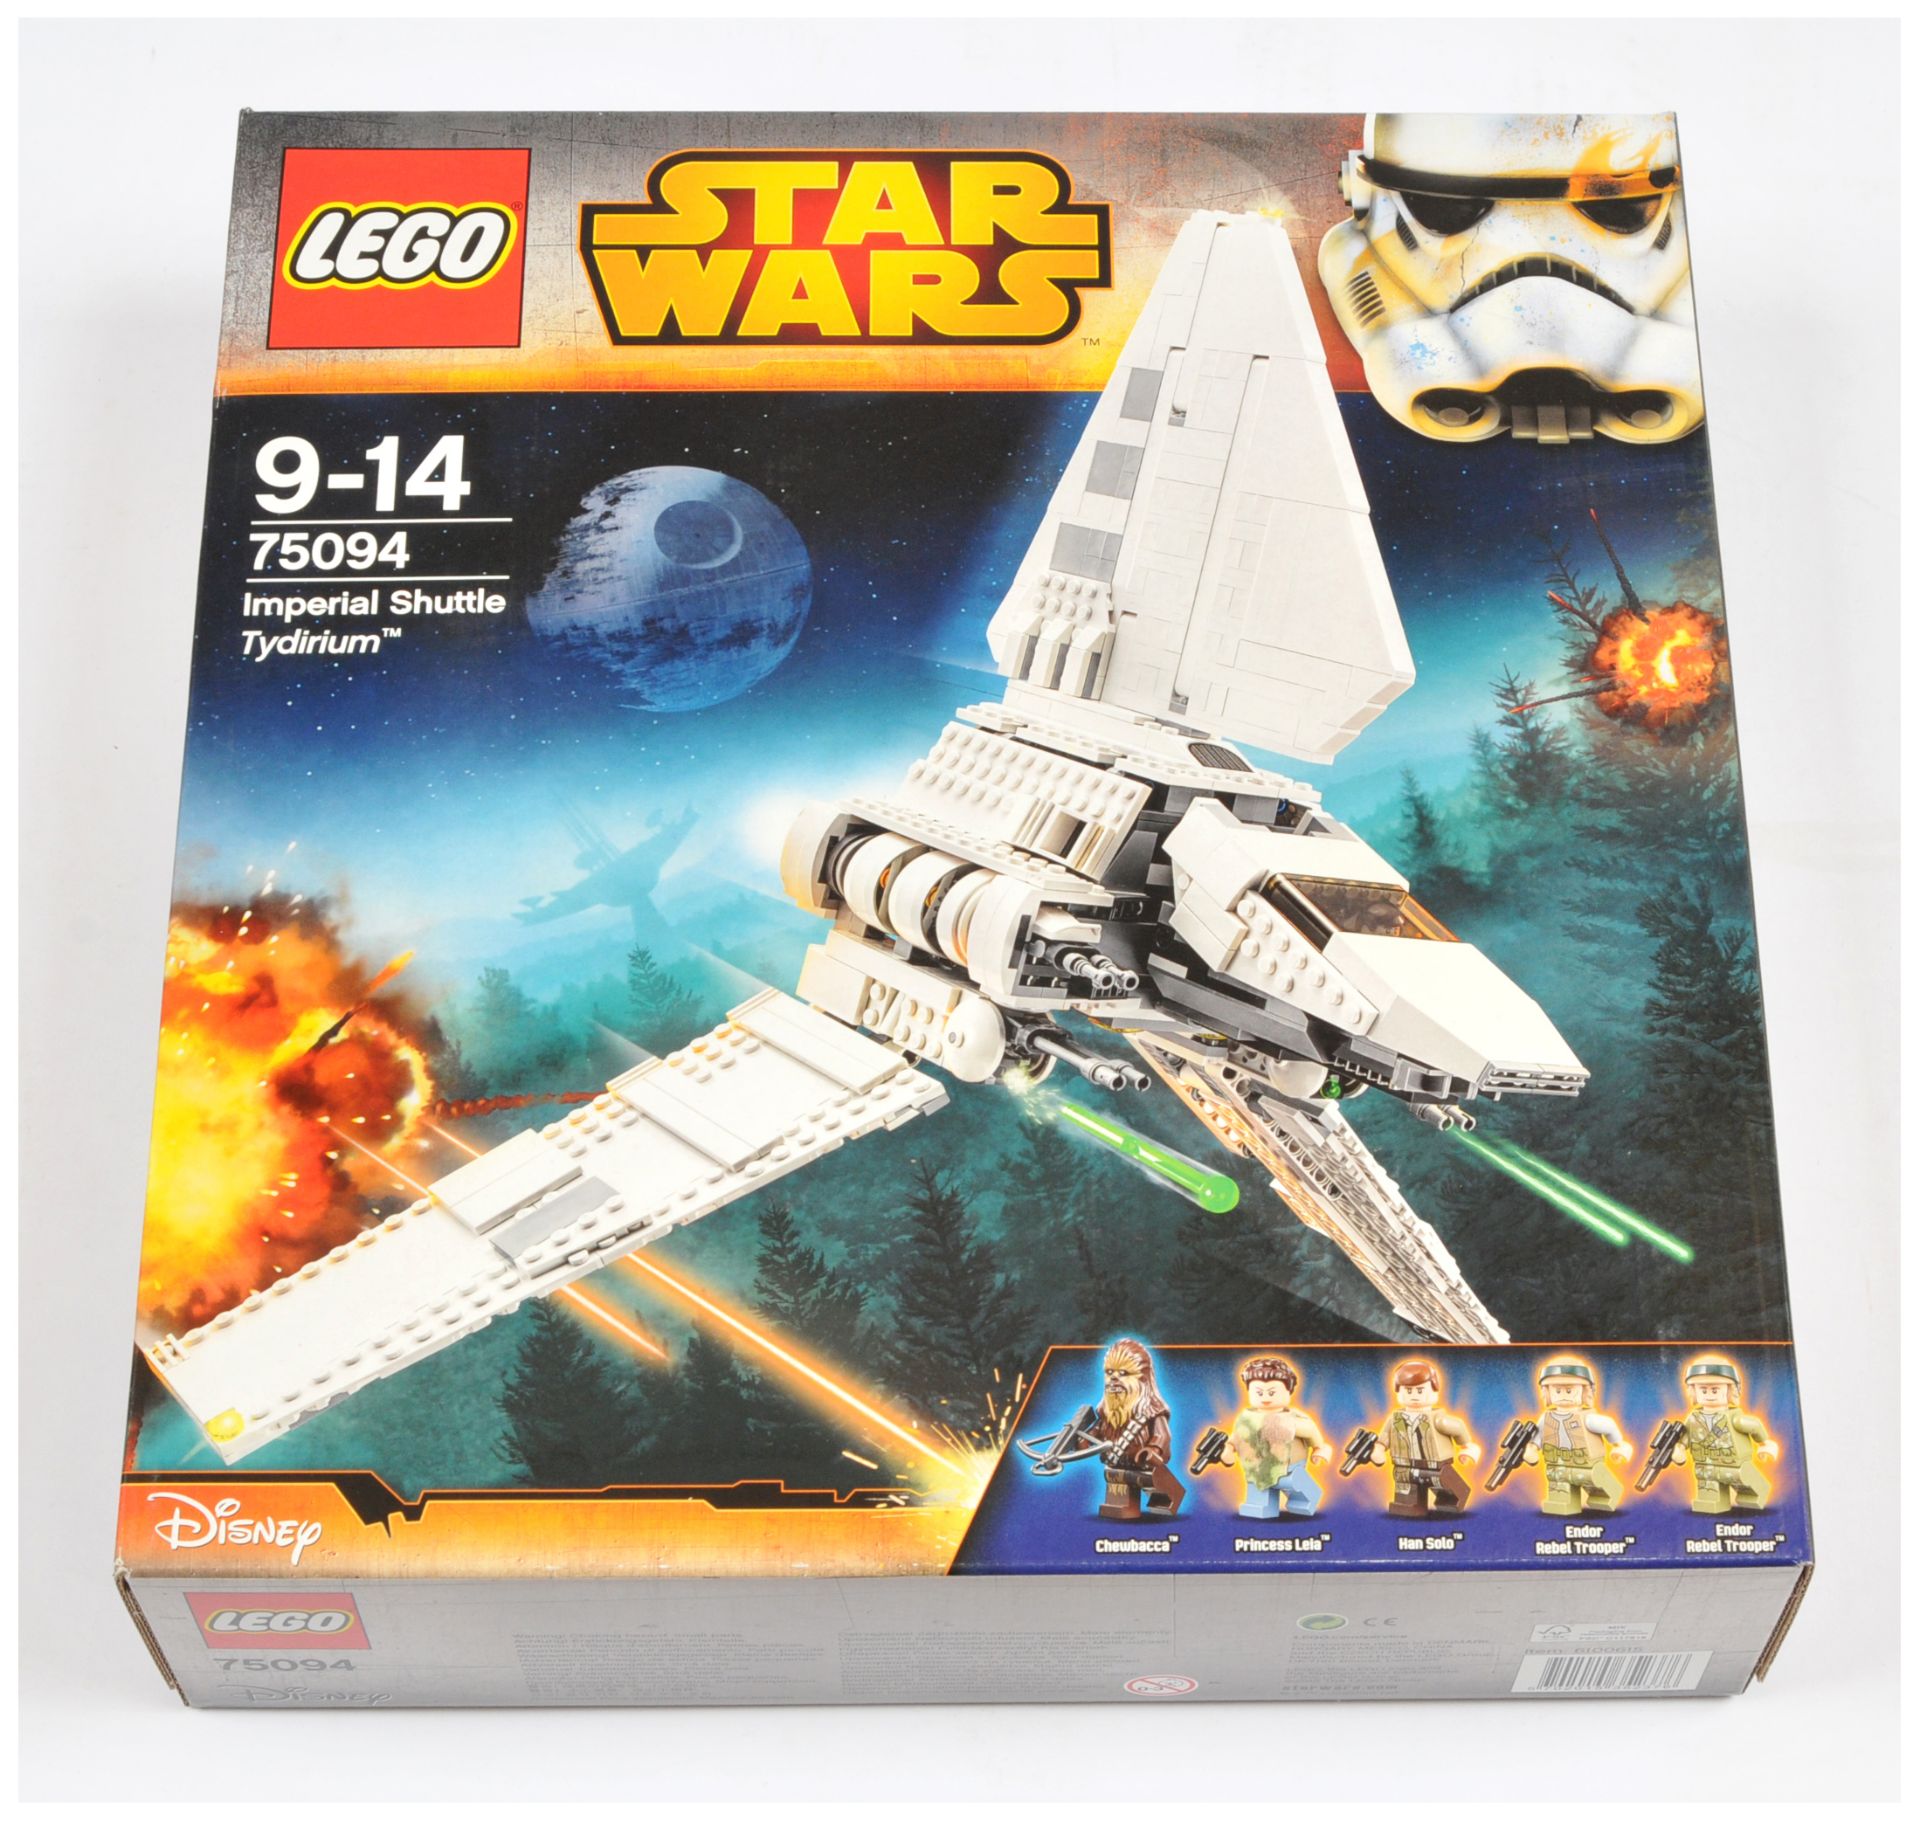 Lego Star Wars 75094 Imperial Shuttle Tydirium, within Near Mint Sealed packaging.